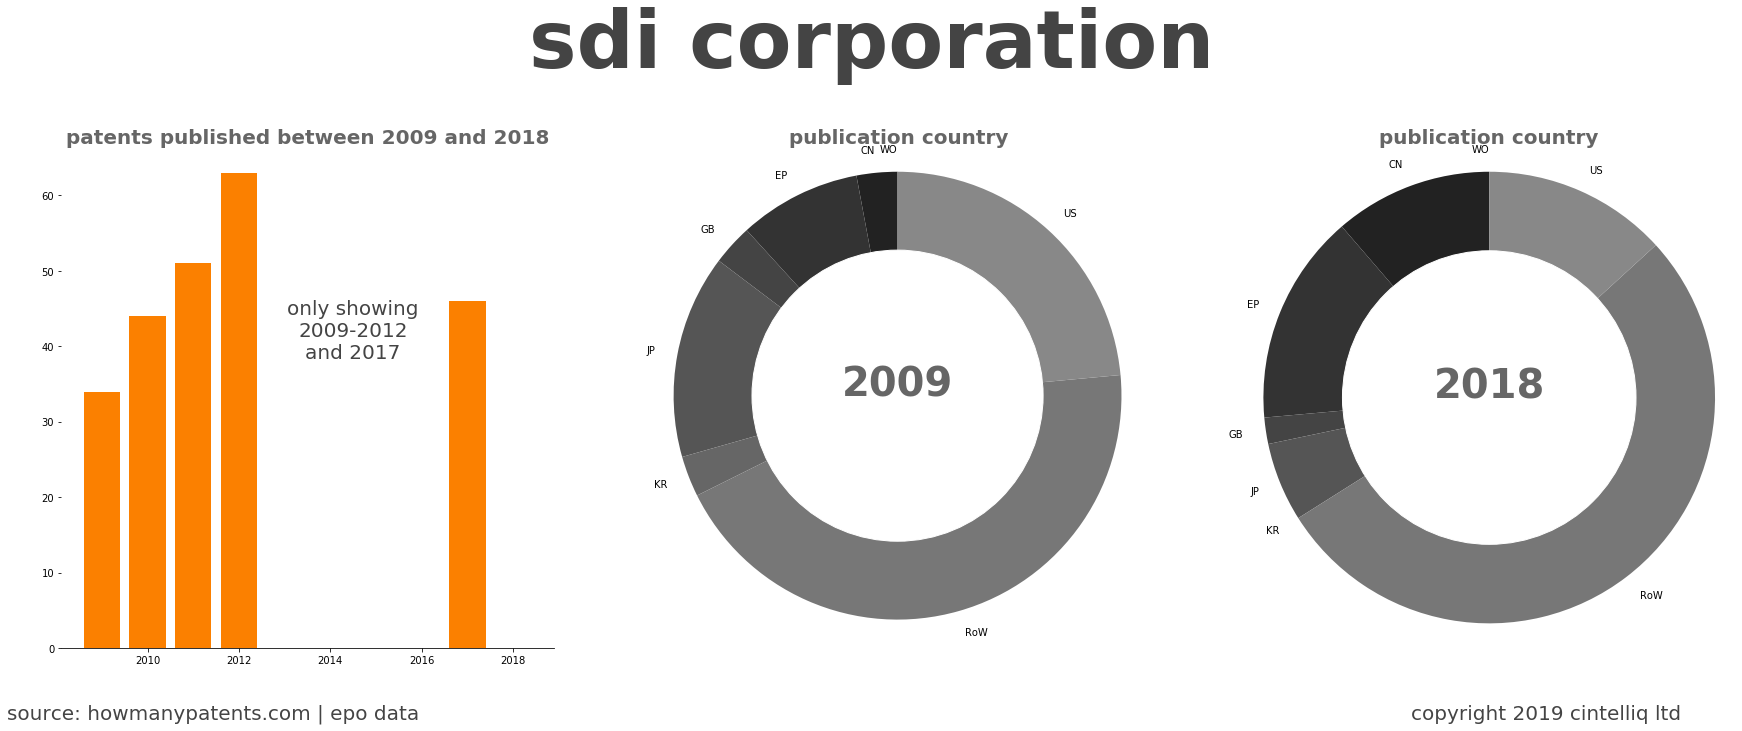 summary of patents for Sdi Corporation